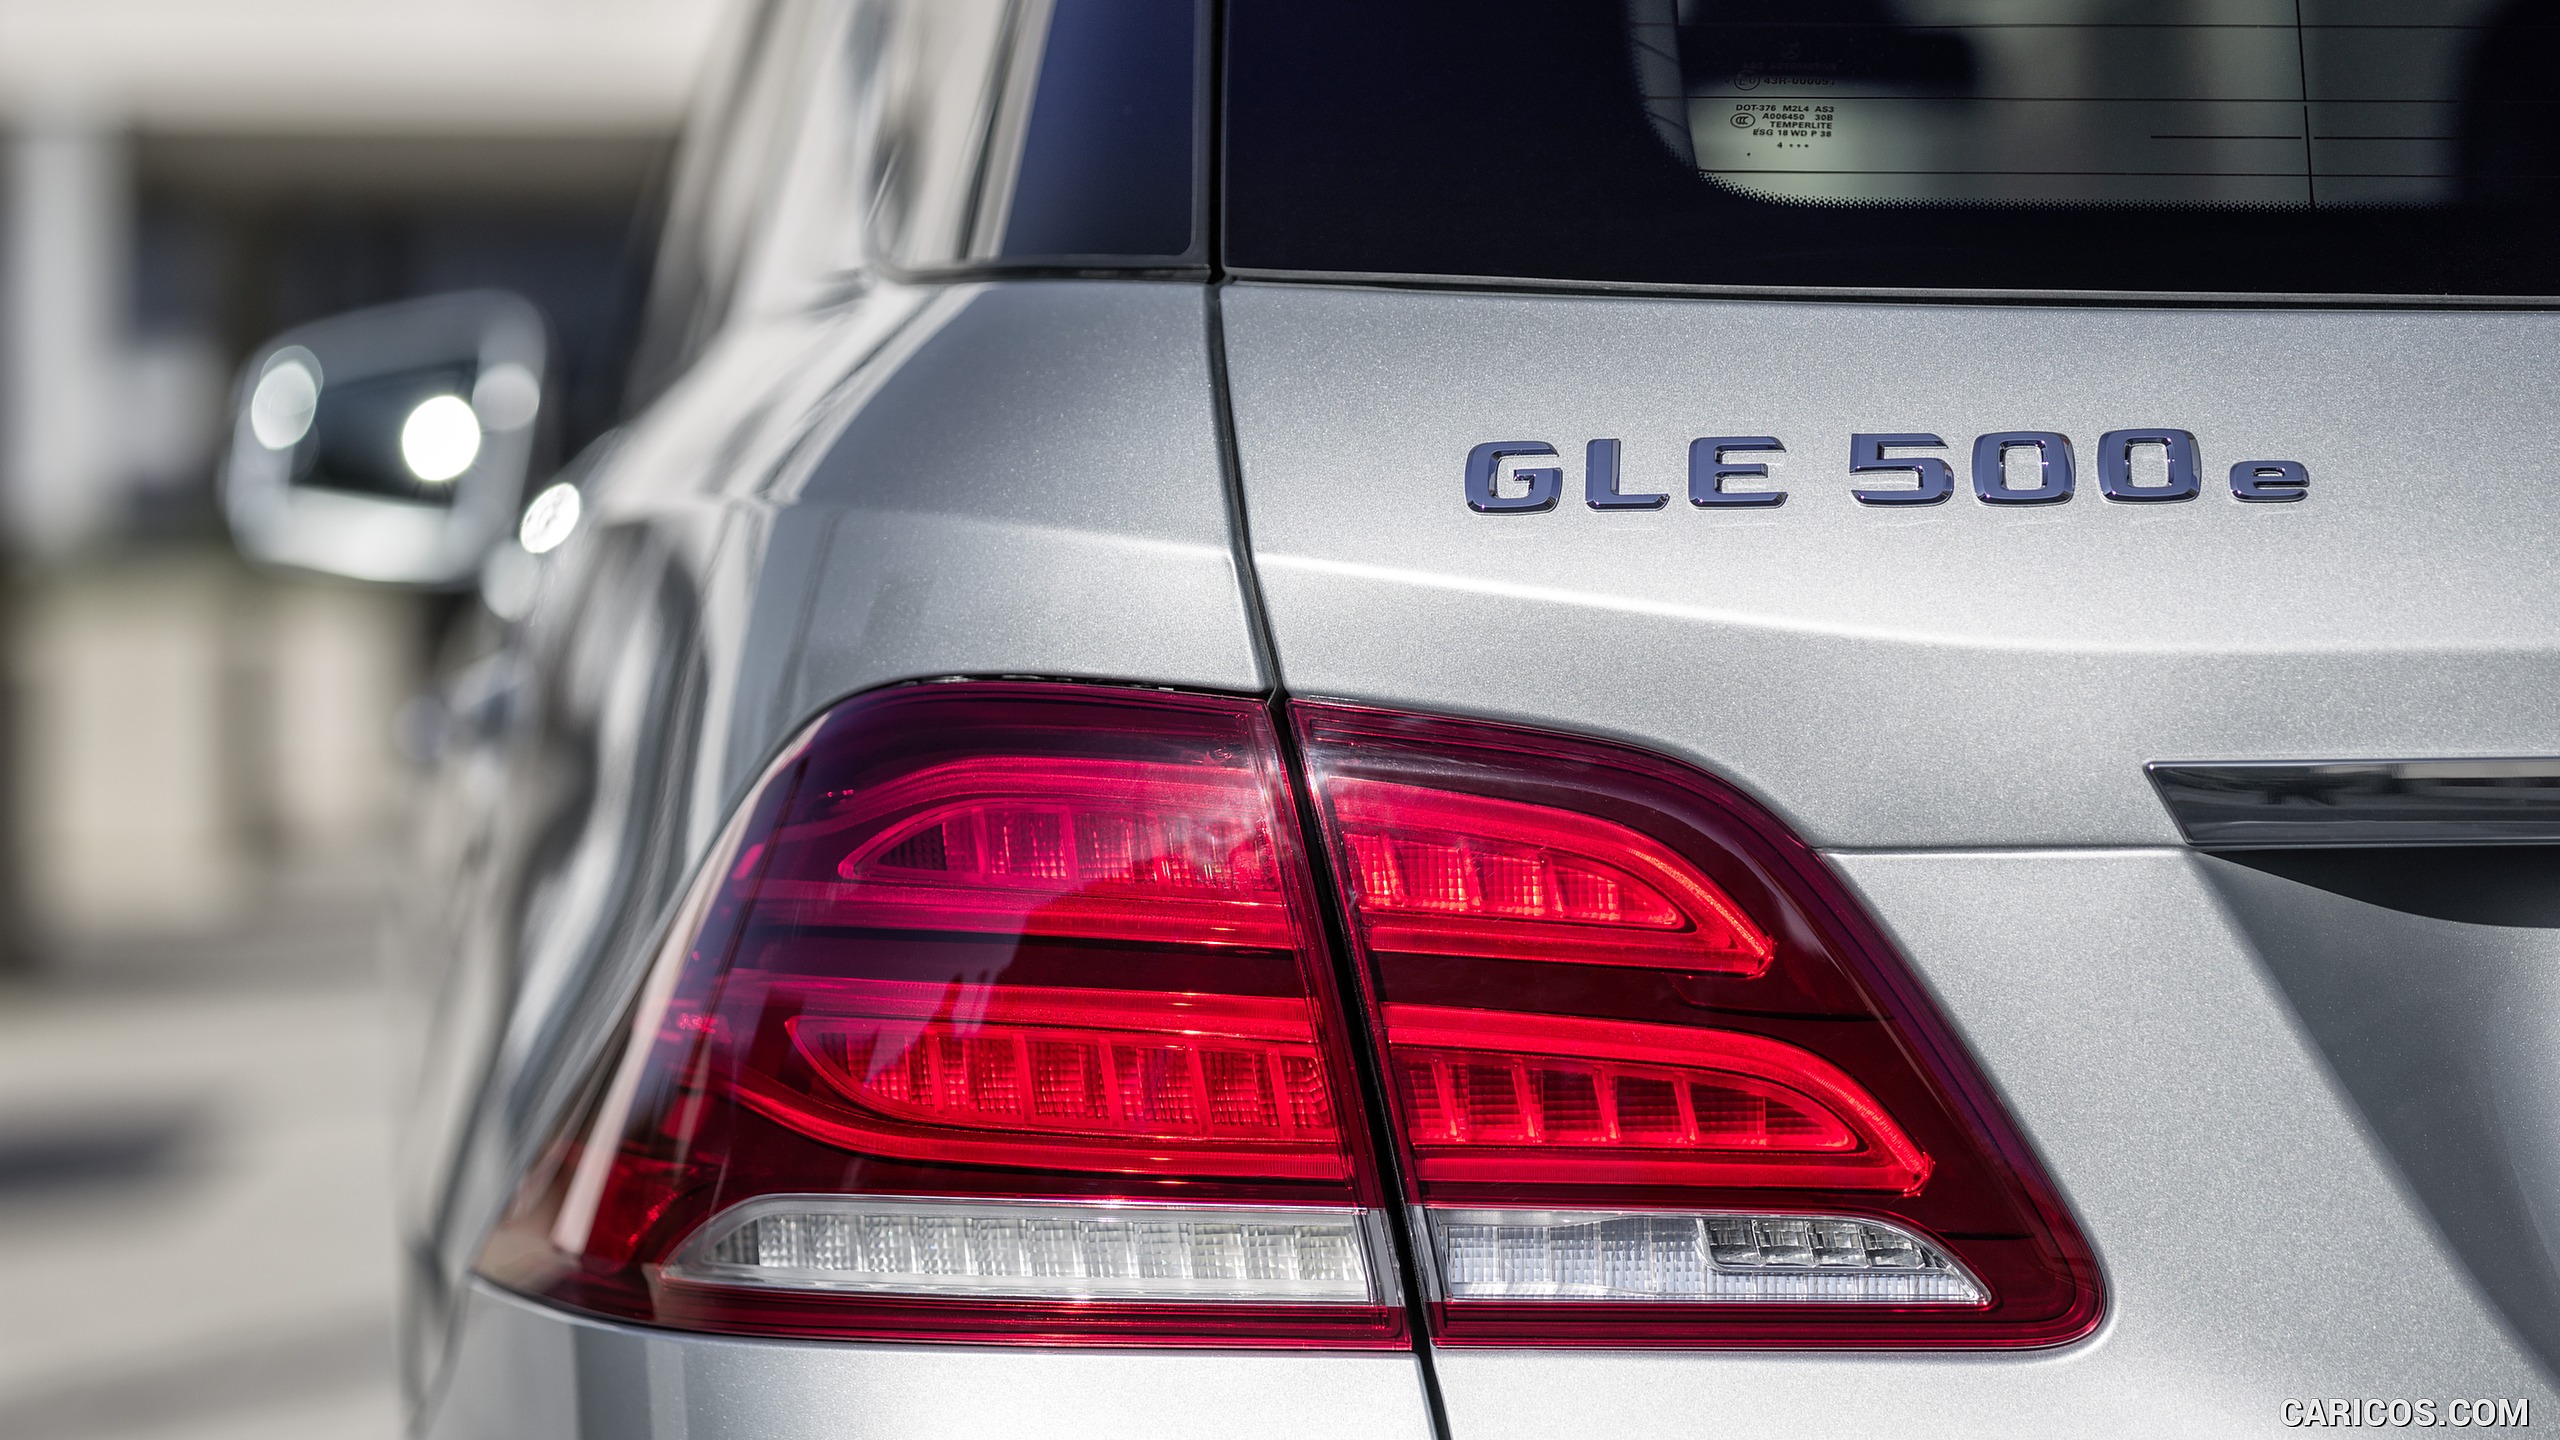 2016 Mercedes-Benz GLE-Class GLE 500 e AMG Line (Diamond Silver Metalic) - Tail Light, #19 of 141